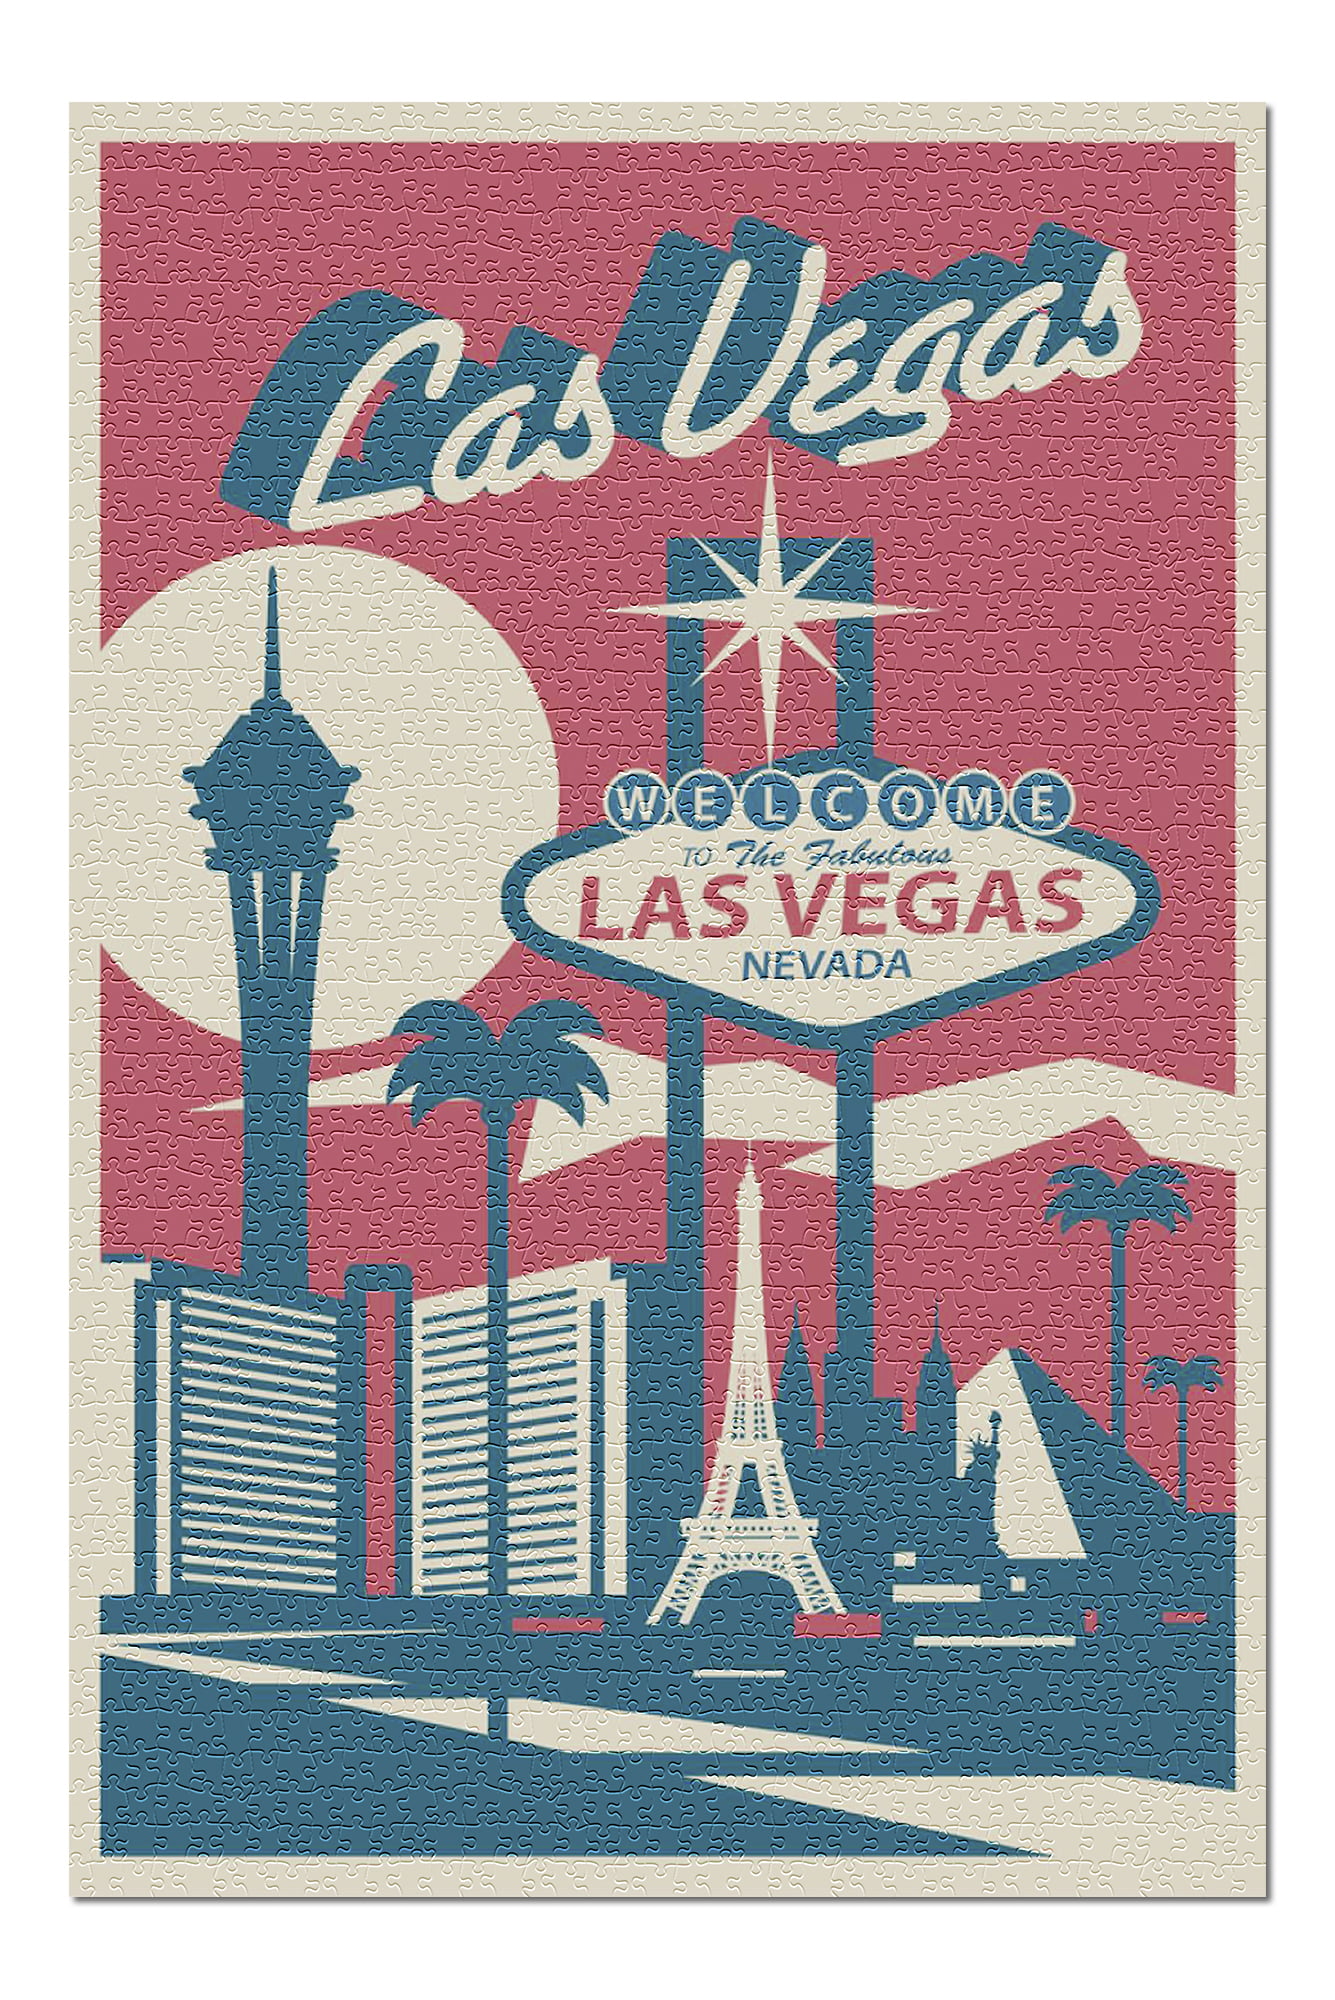 Las Vegas Time